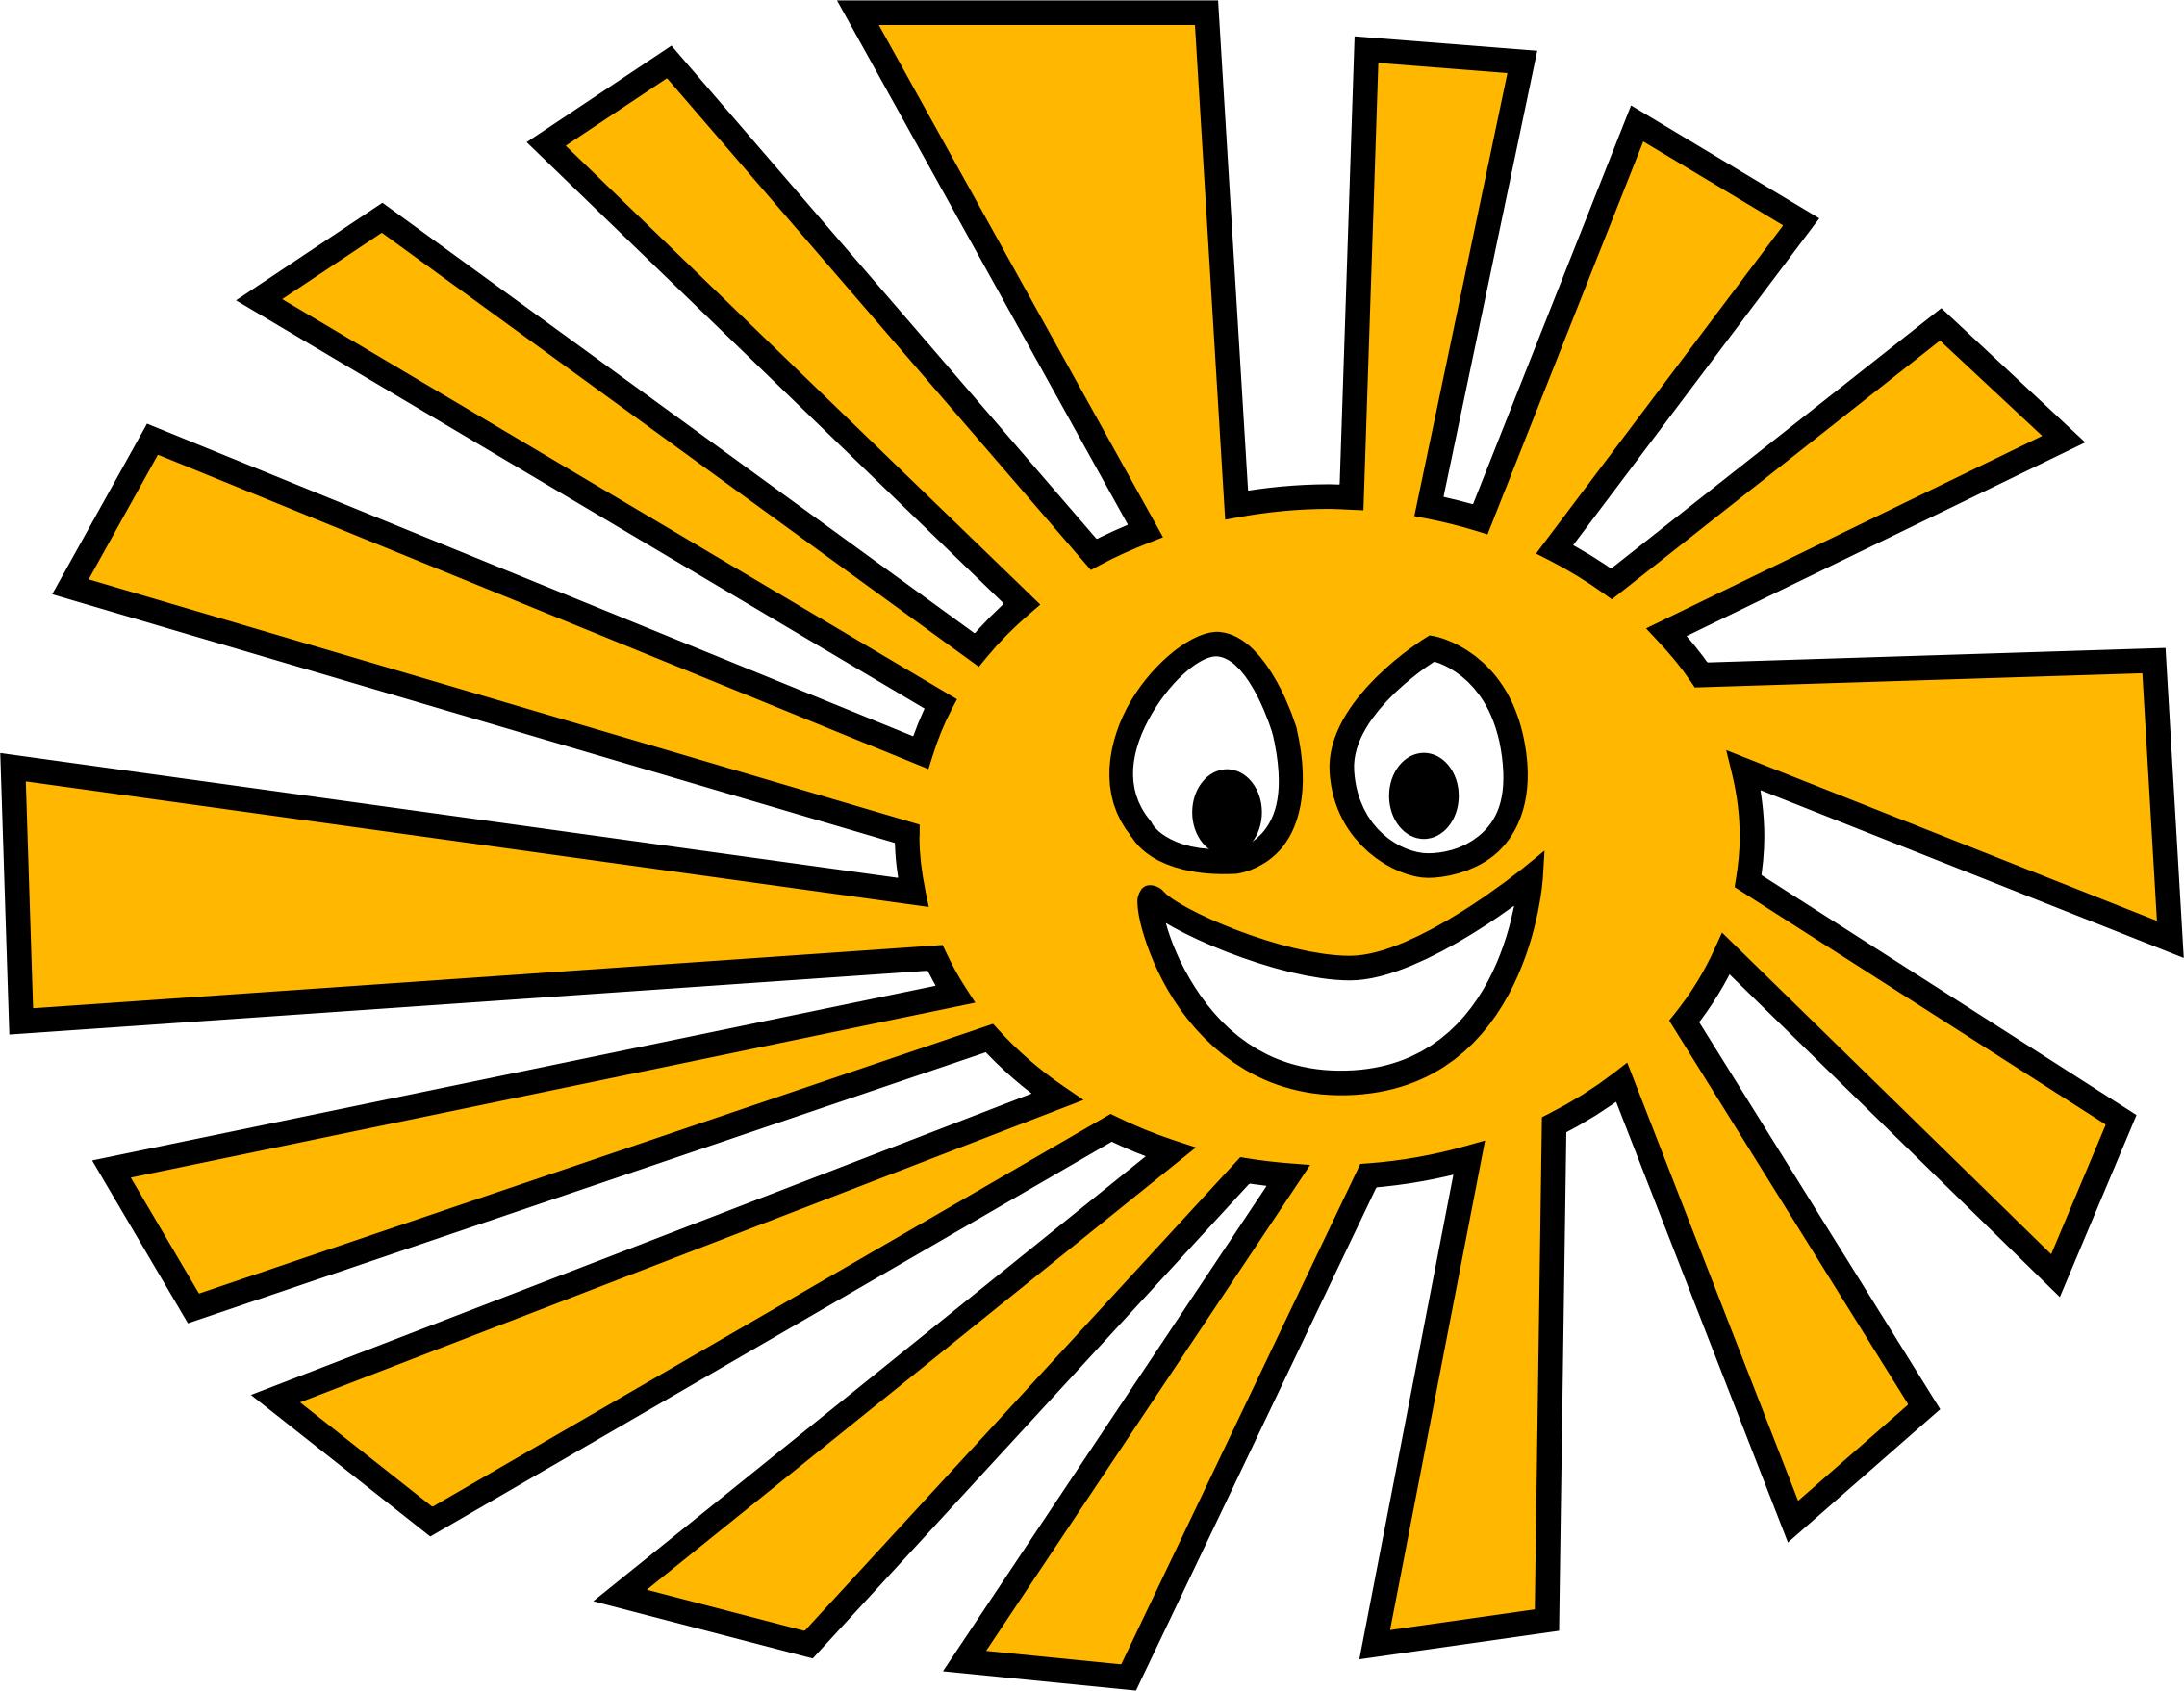 Download Happy Sun vector clipart image - Free stock photo - Public ...